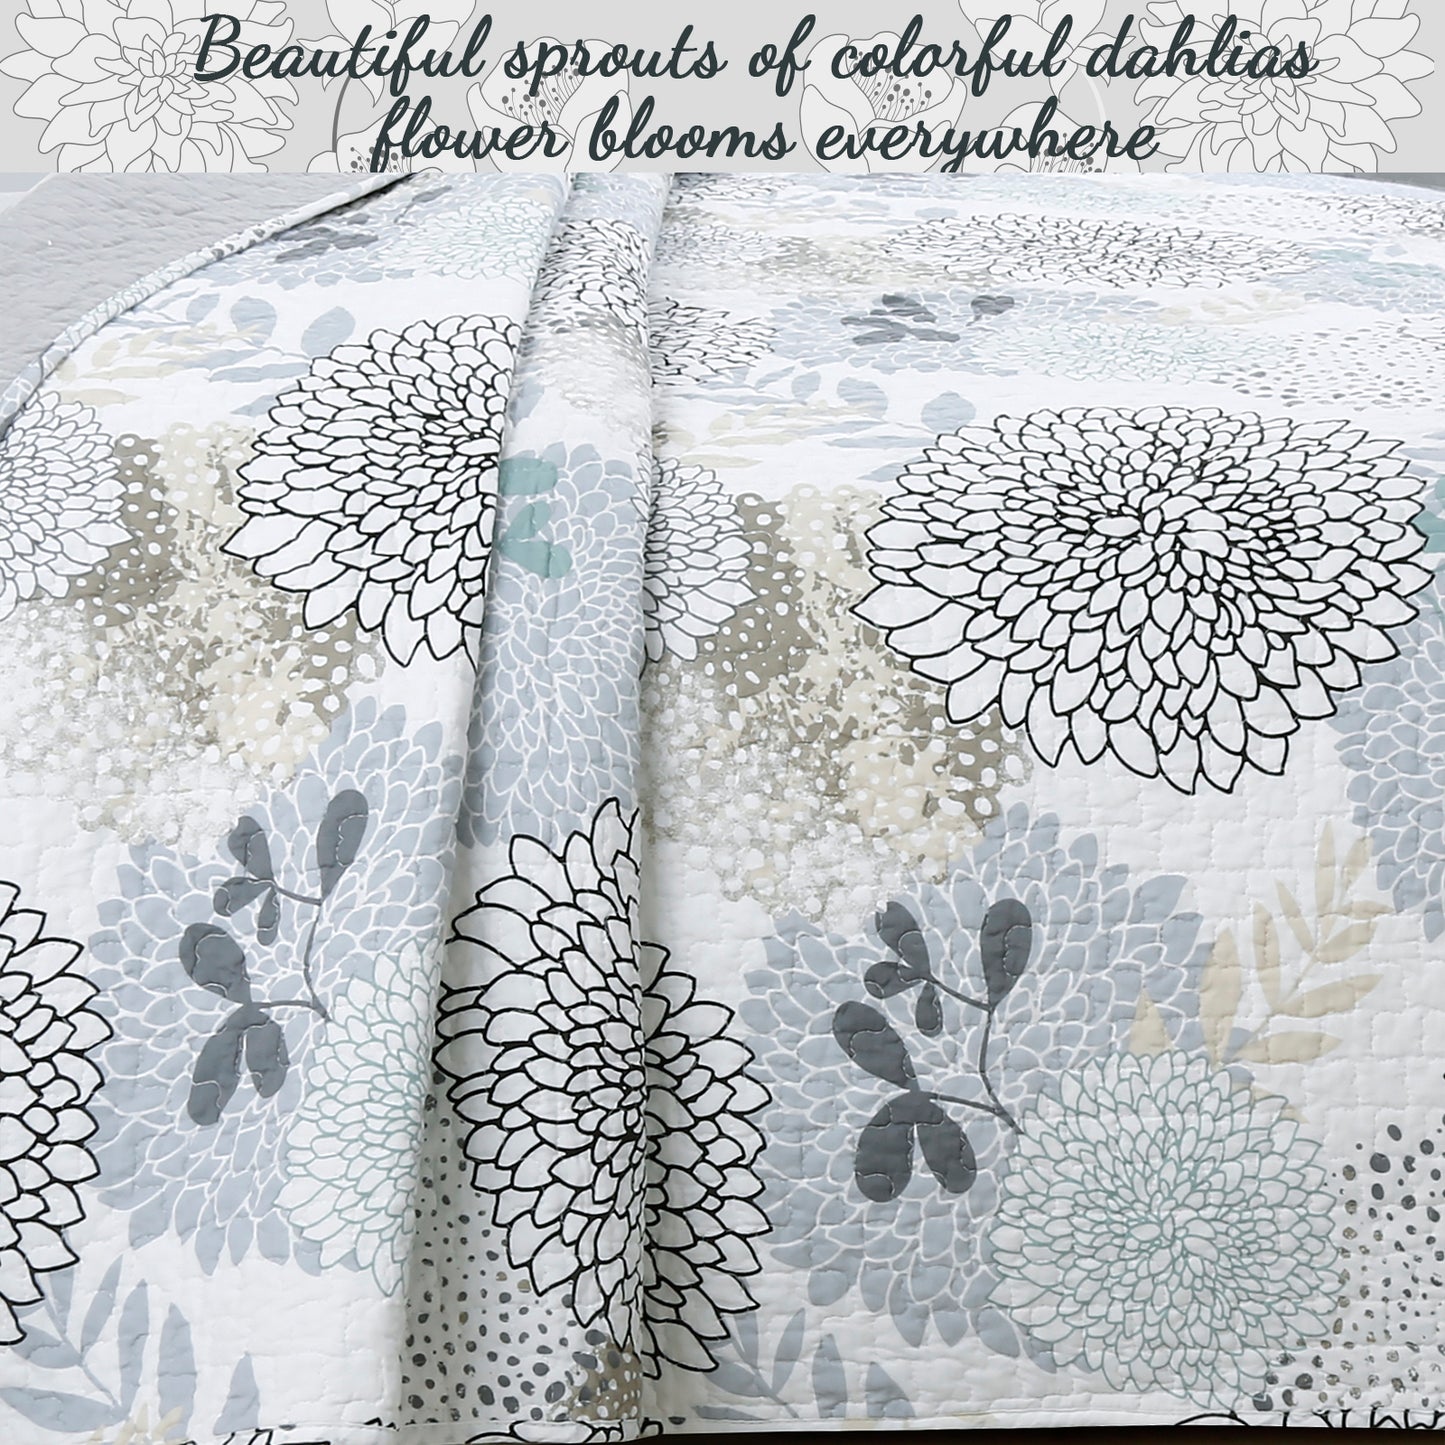 Nina Floral Cotton Reversible Quilt Bedding Set